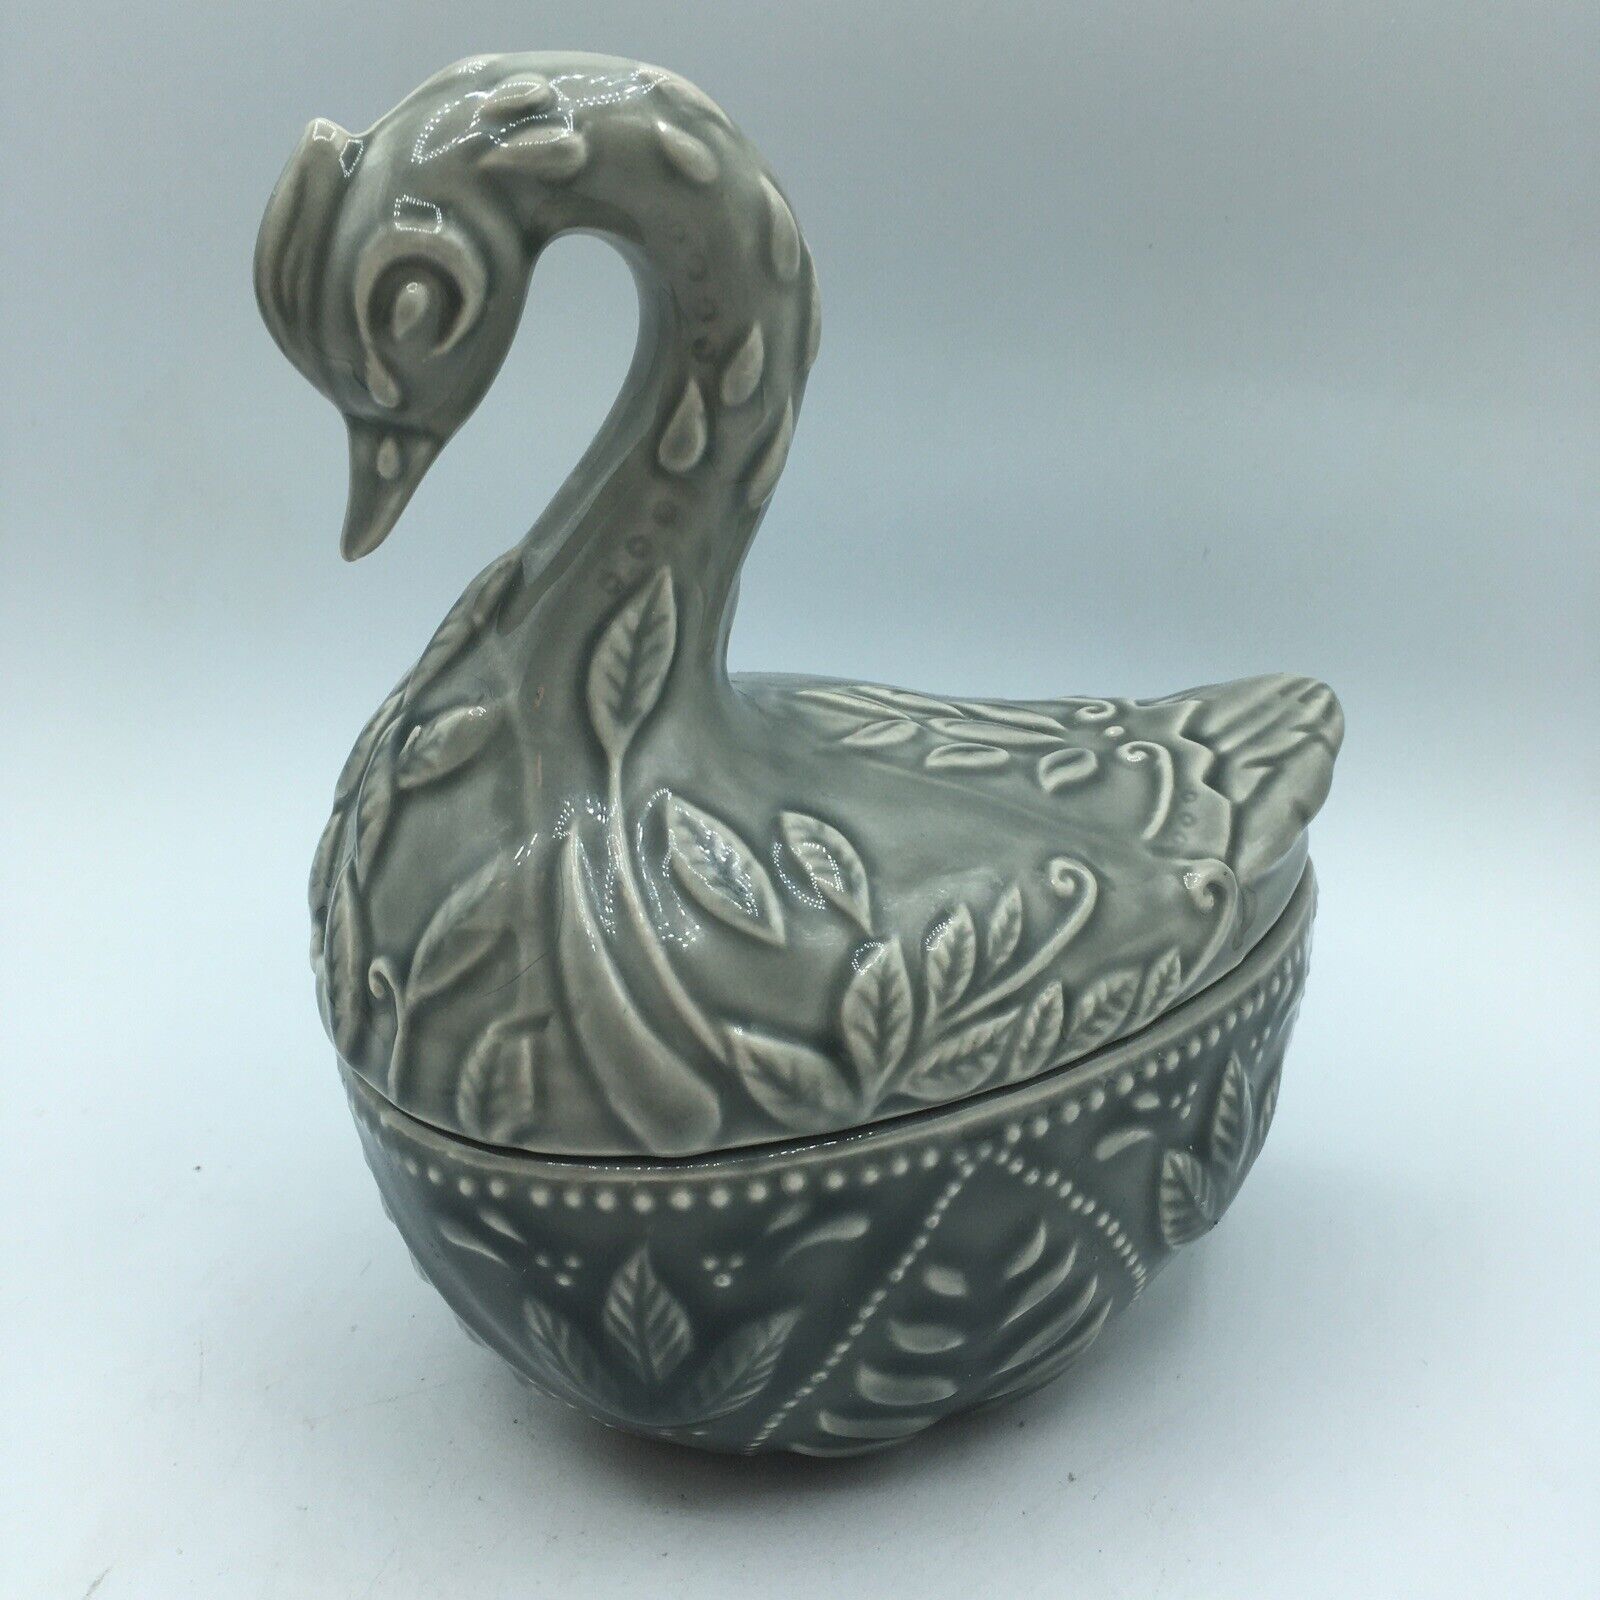 anthropologie swan On Nest figural covered trinket disk Ceramic Gray Glaze 6”